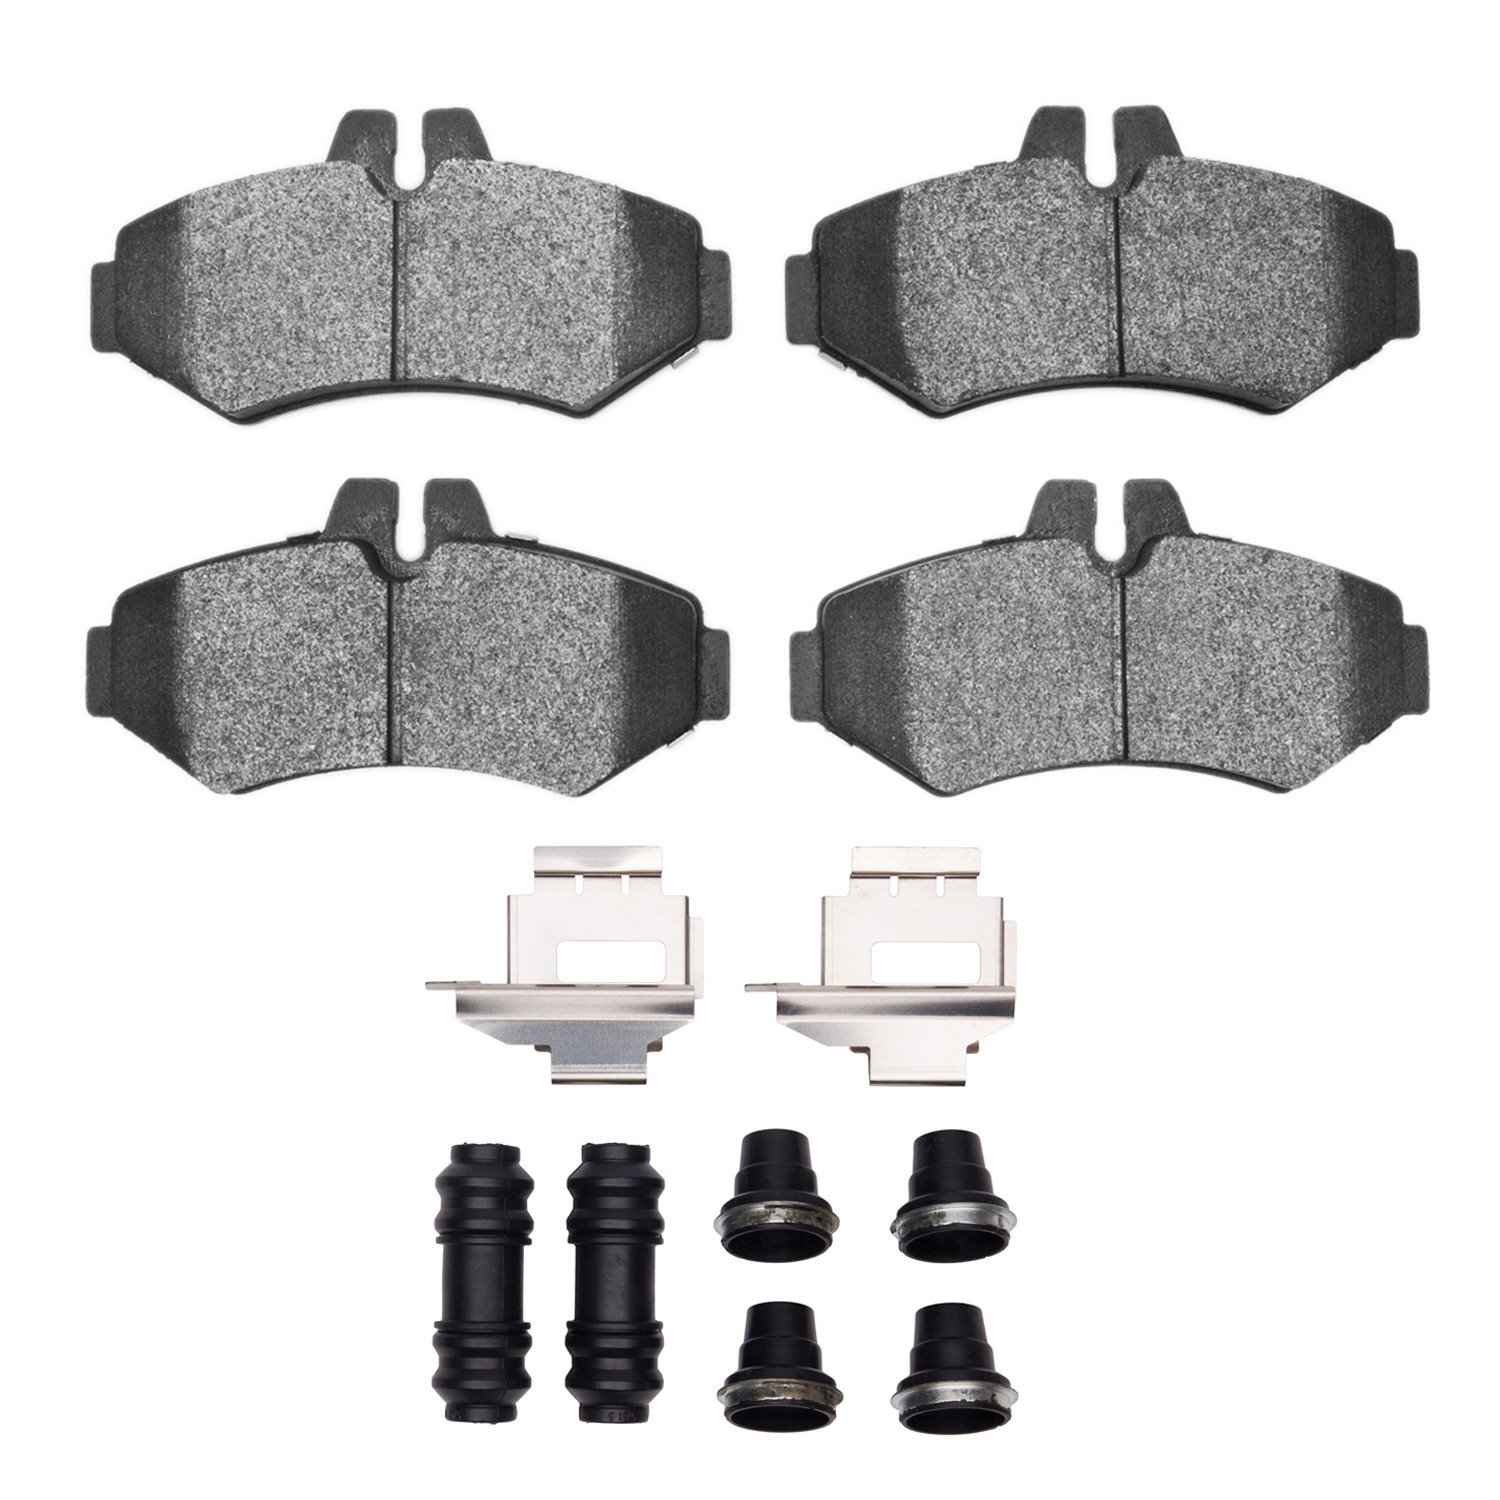 Super-Duty Brake Pads & Hardware Kit, 2002-2018 Fits Multiple Makes/Models, Position: Rear Right